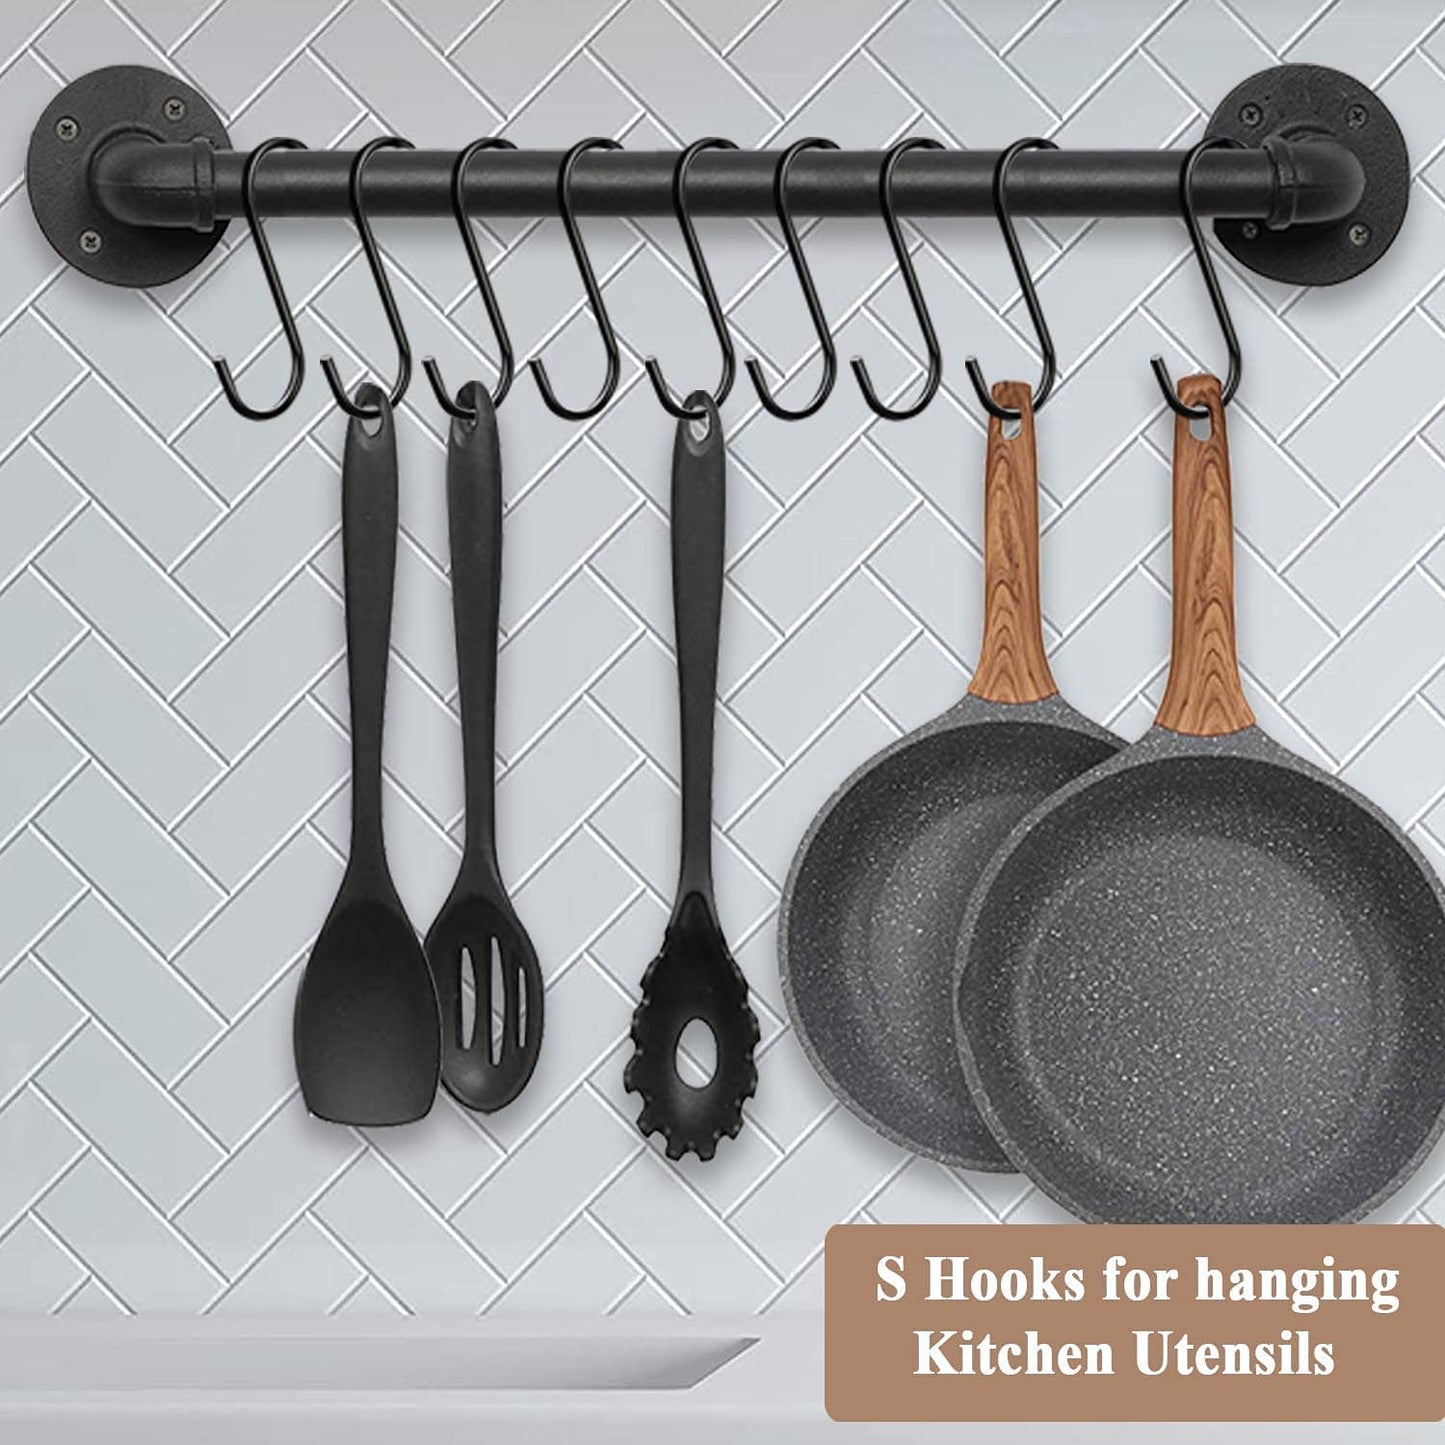 Casa De Amor Iron S Hooks, Perfect for kitchens, garden, closets, workshops (Black)- 10 Pack